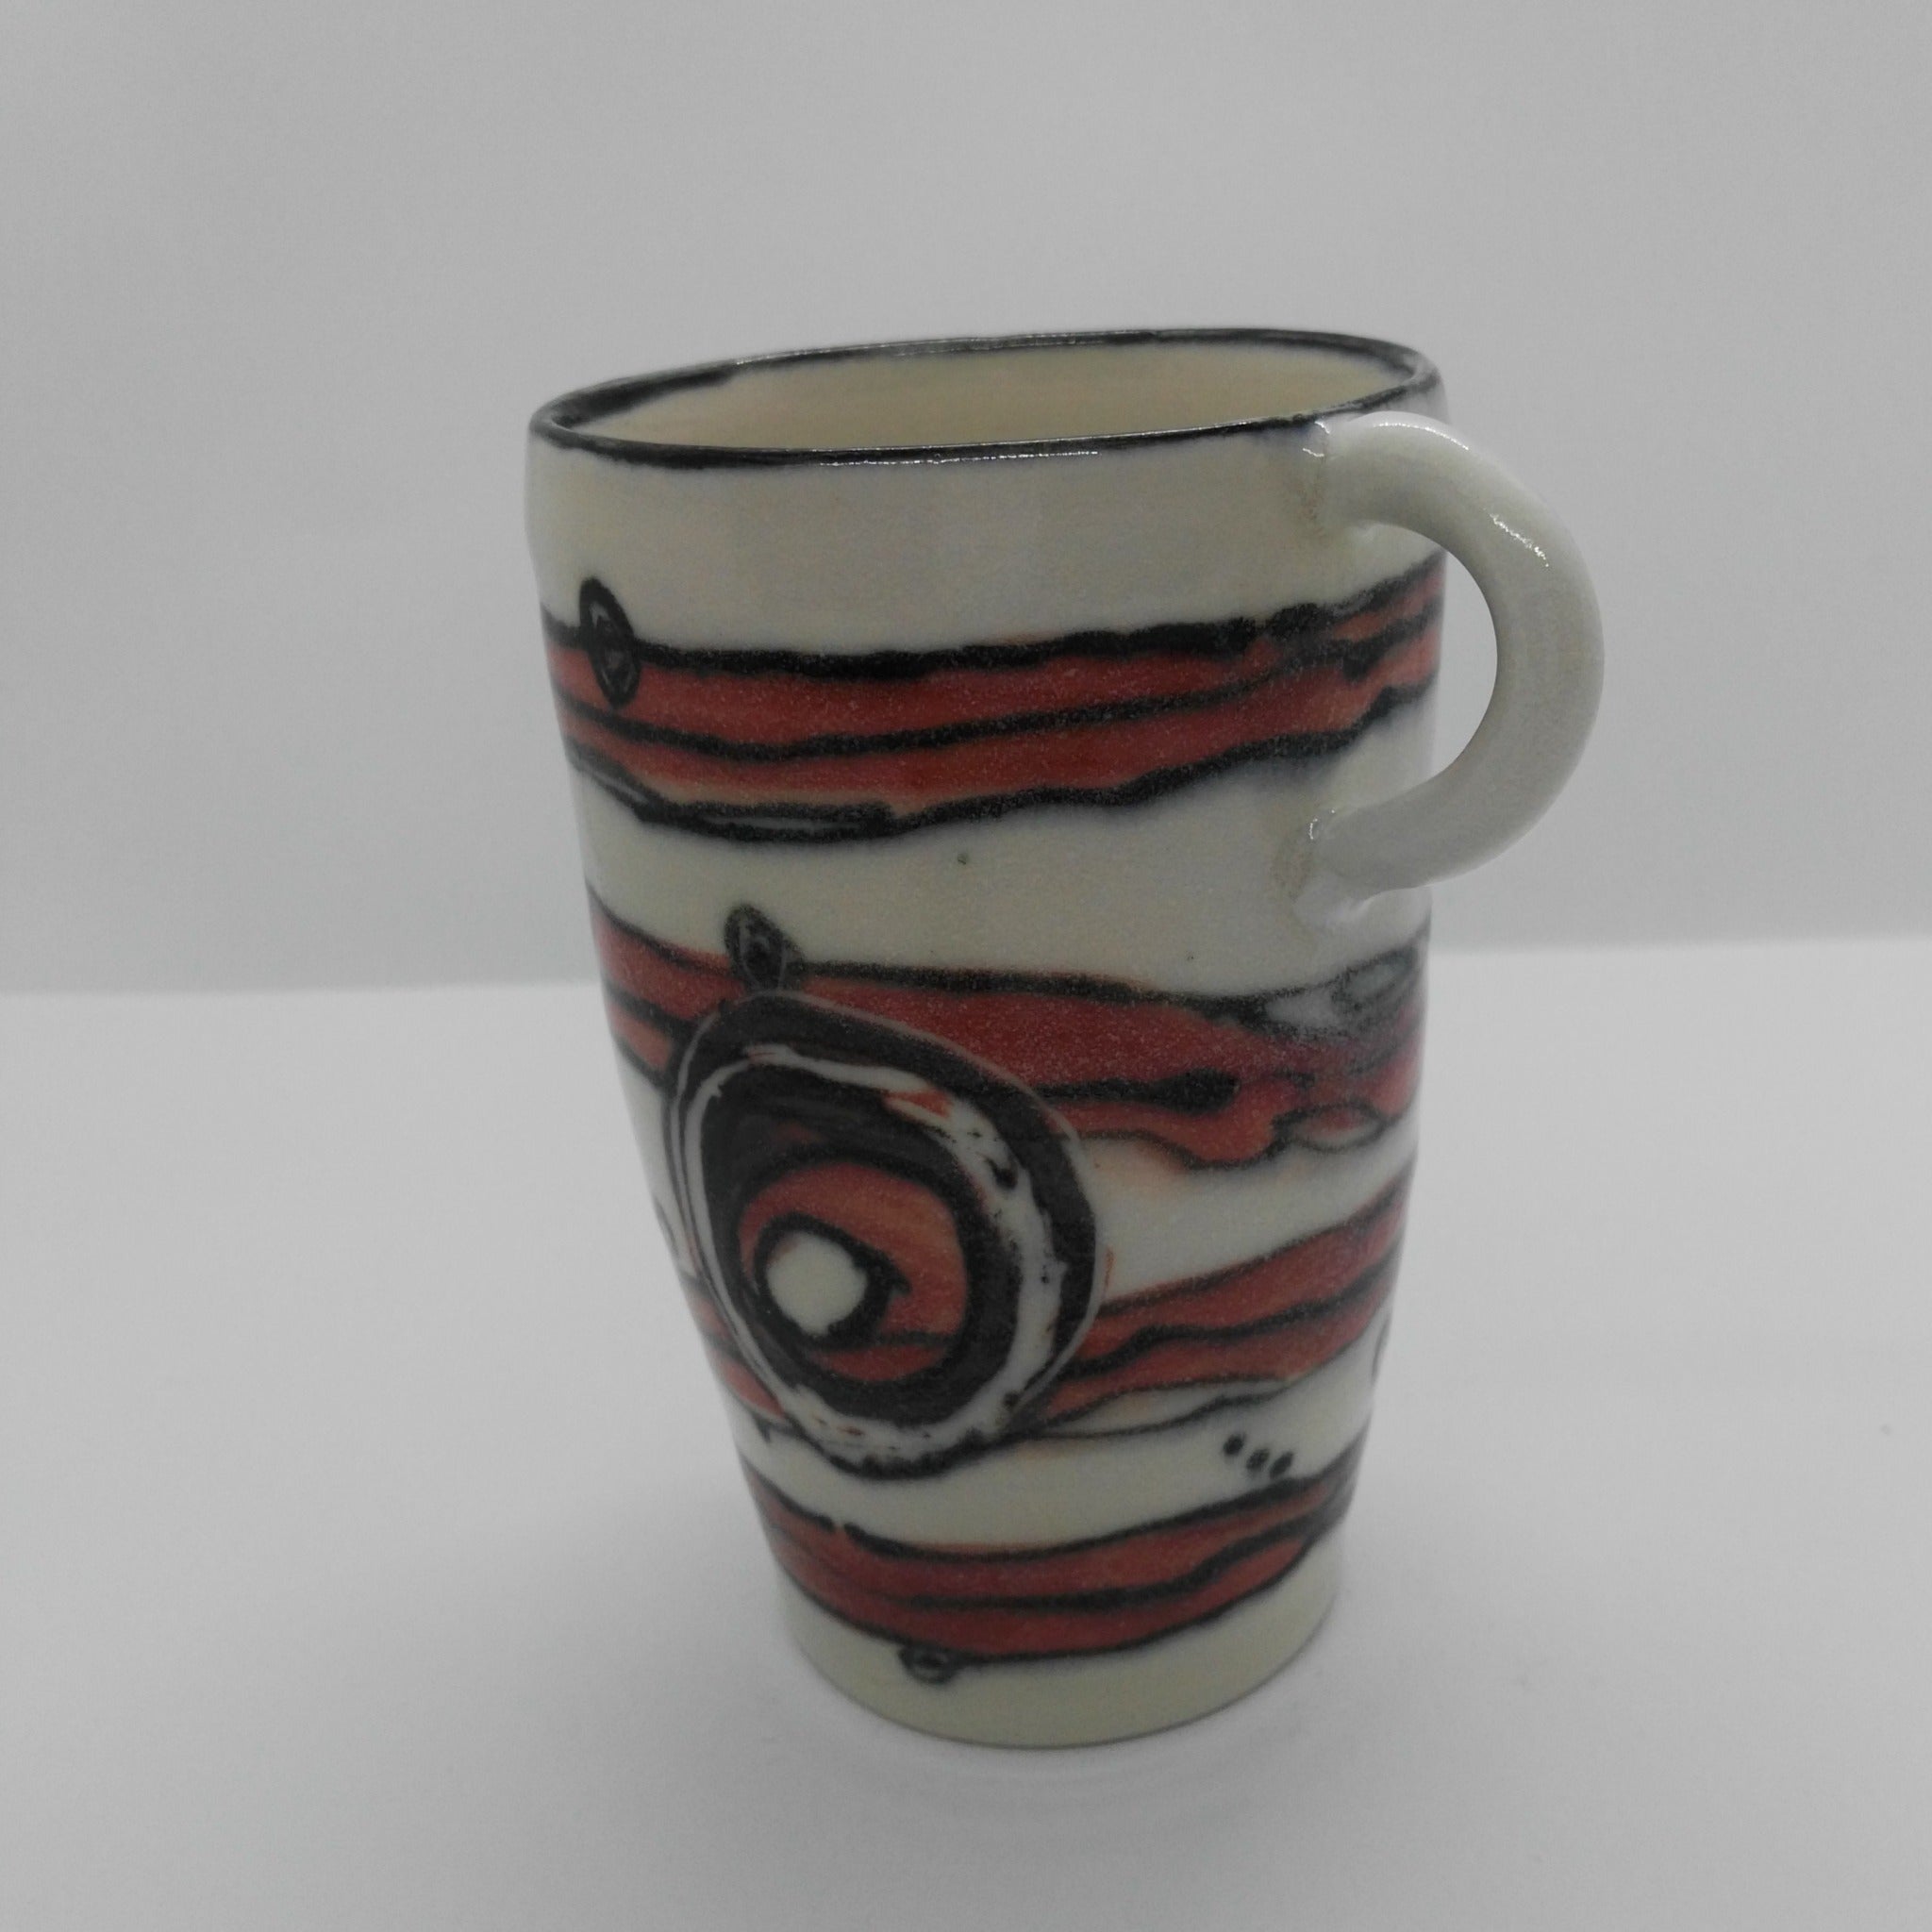 Ceramic mug (red) hand made by Heidi Francis.